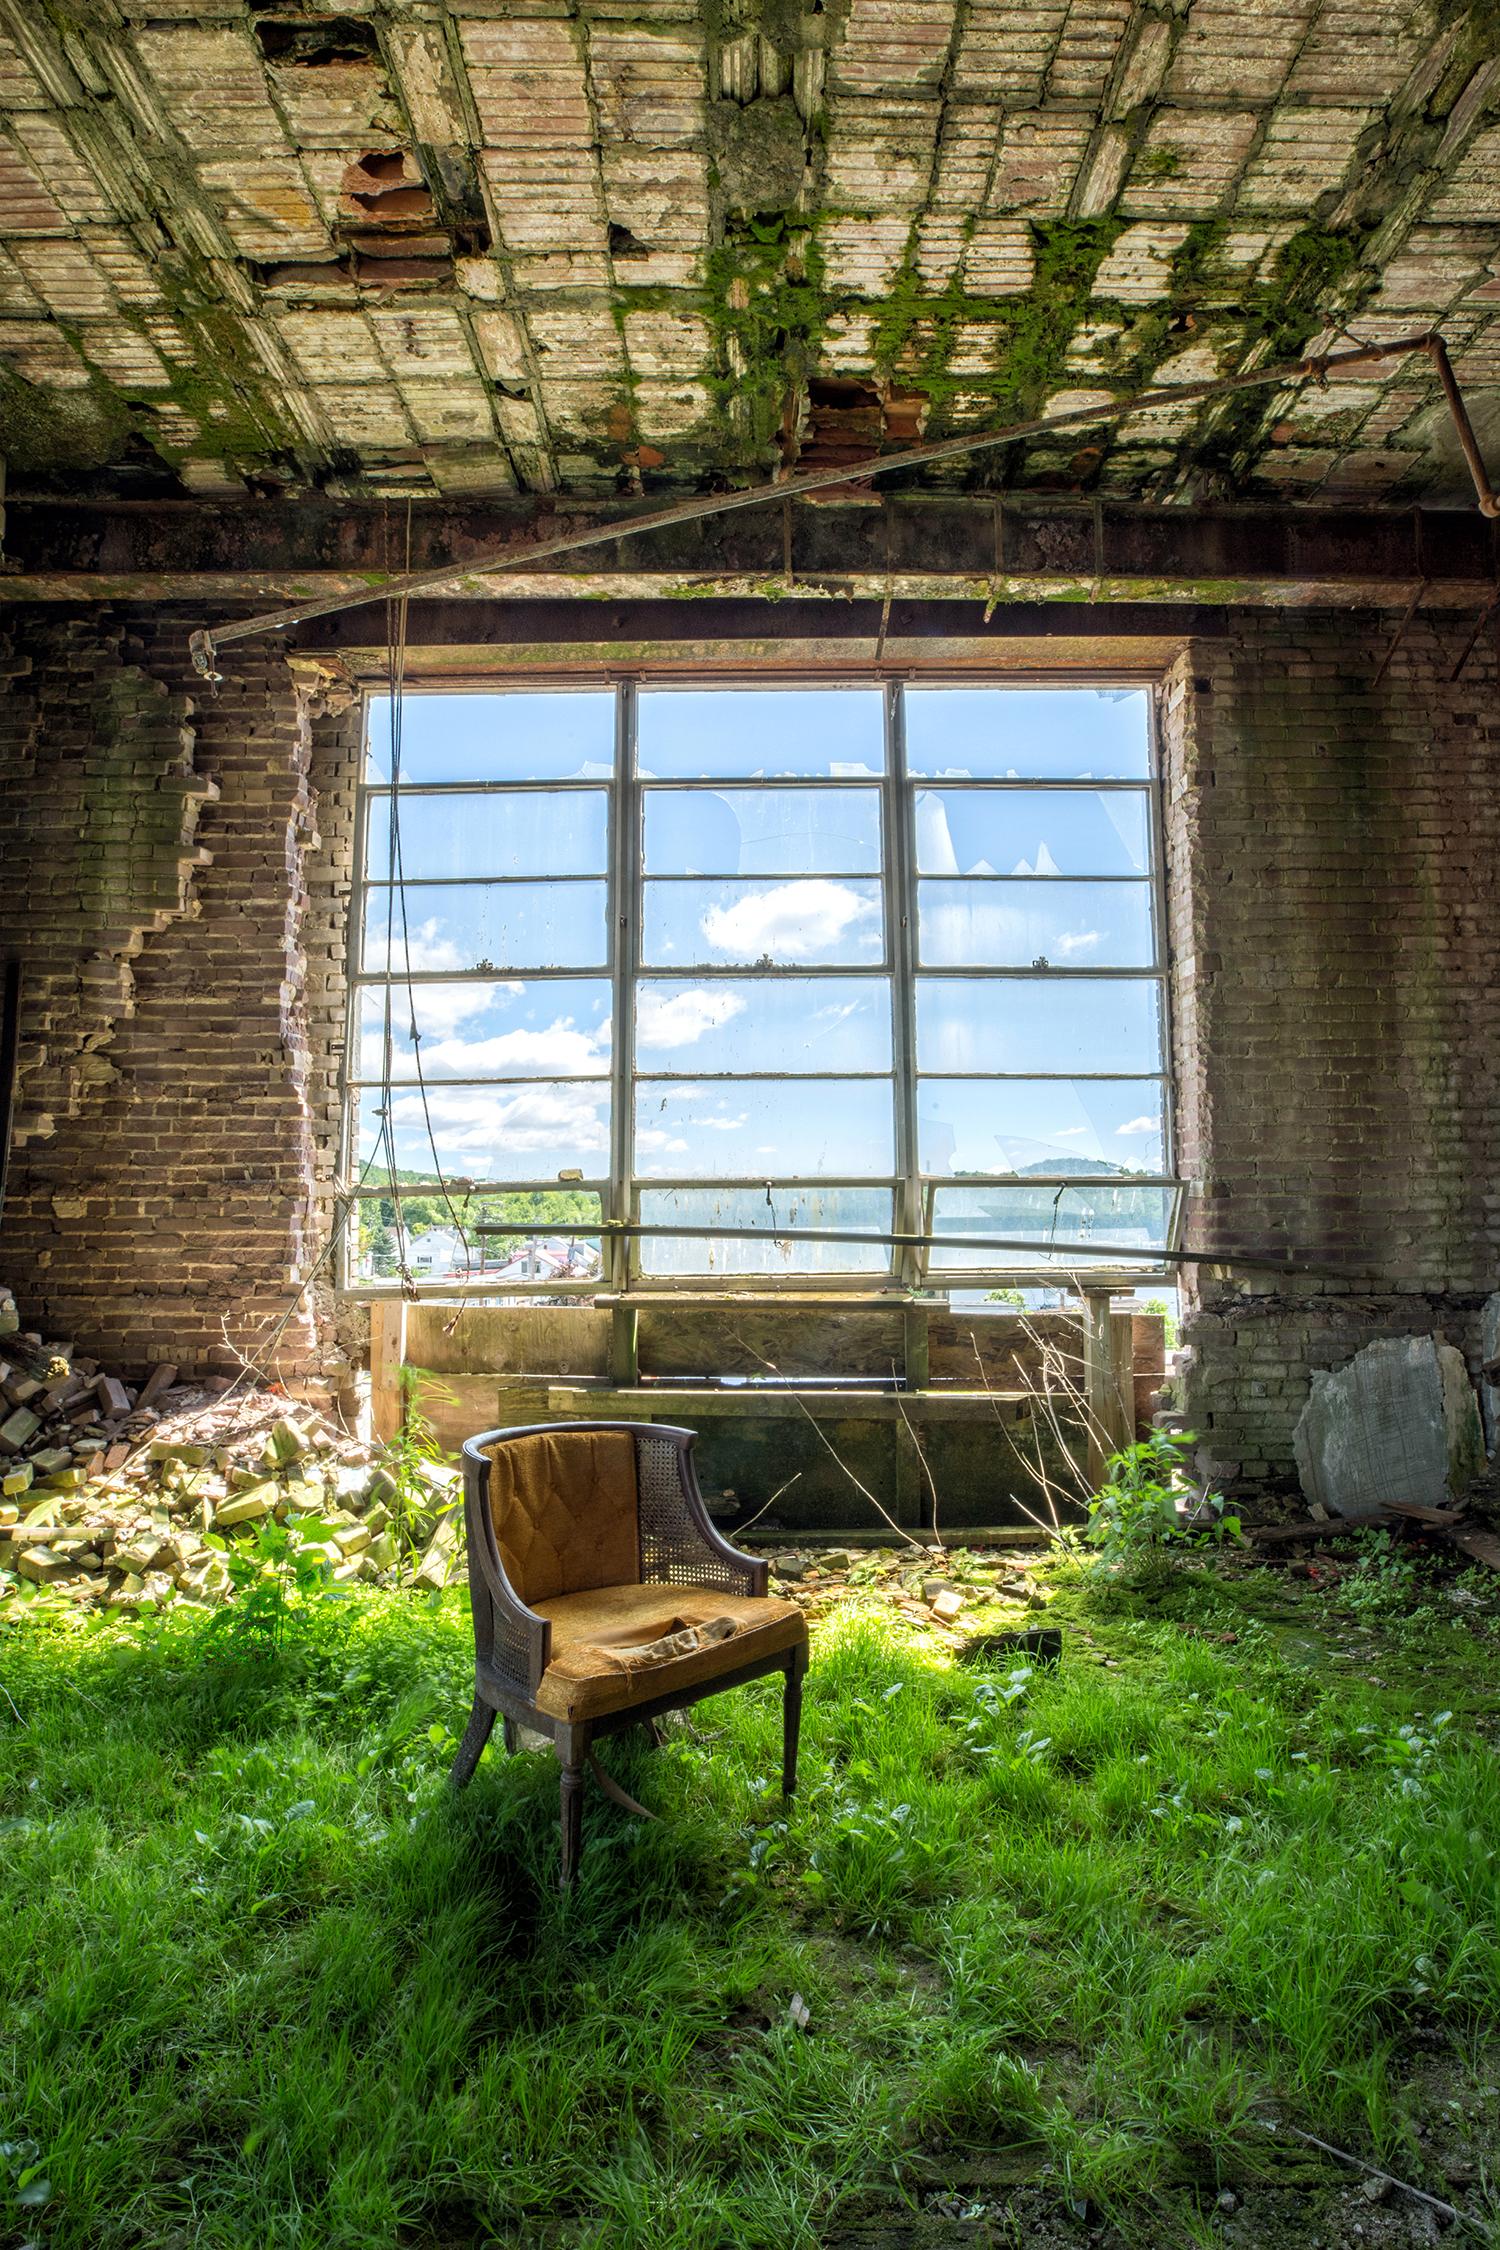 "Exist", contemporary, interior, chair, grass, brick, window, green, photograph